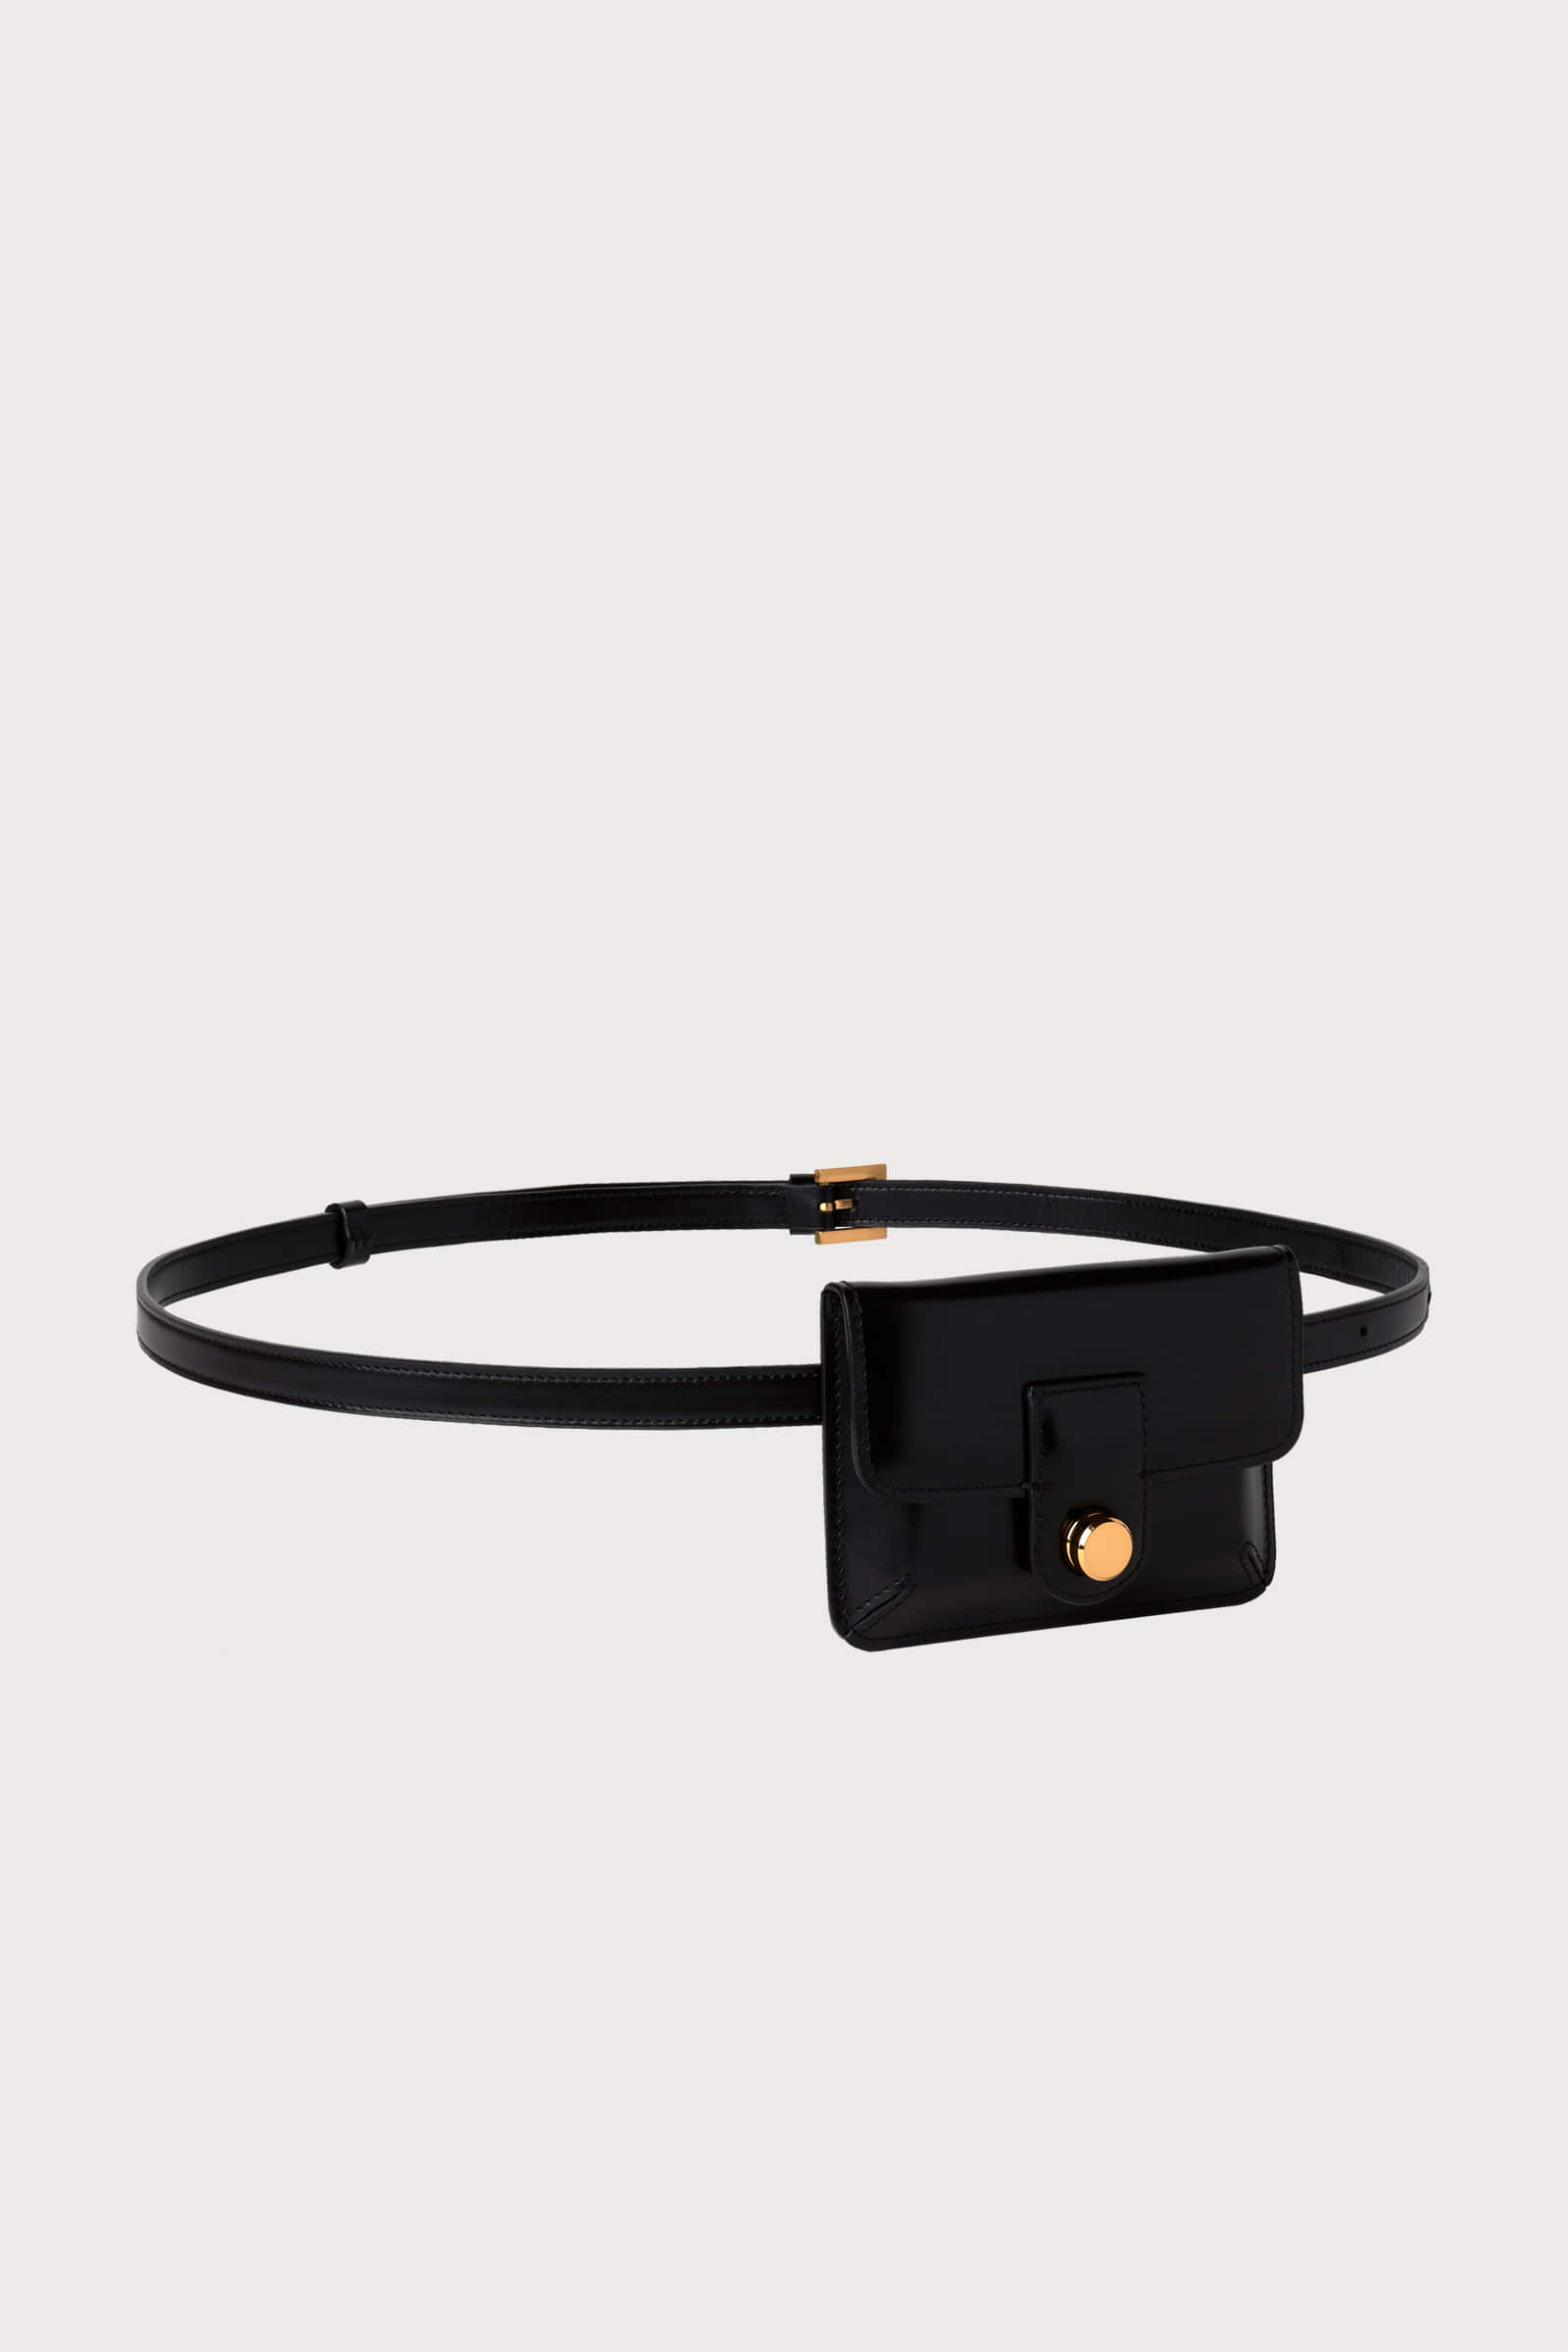 Part.4 Mini belt bag (black)